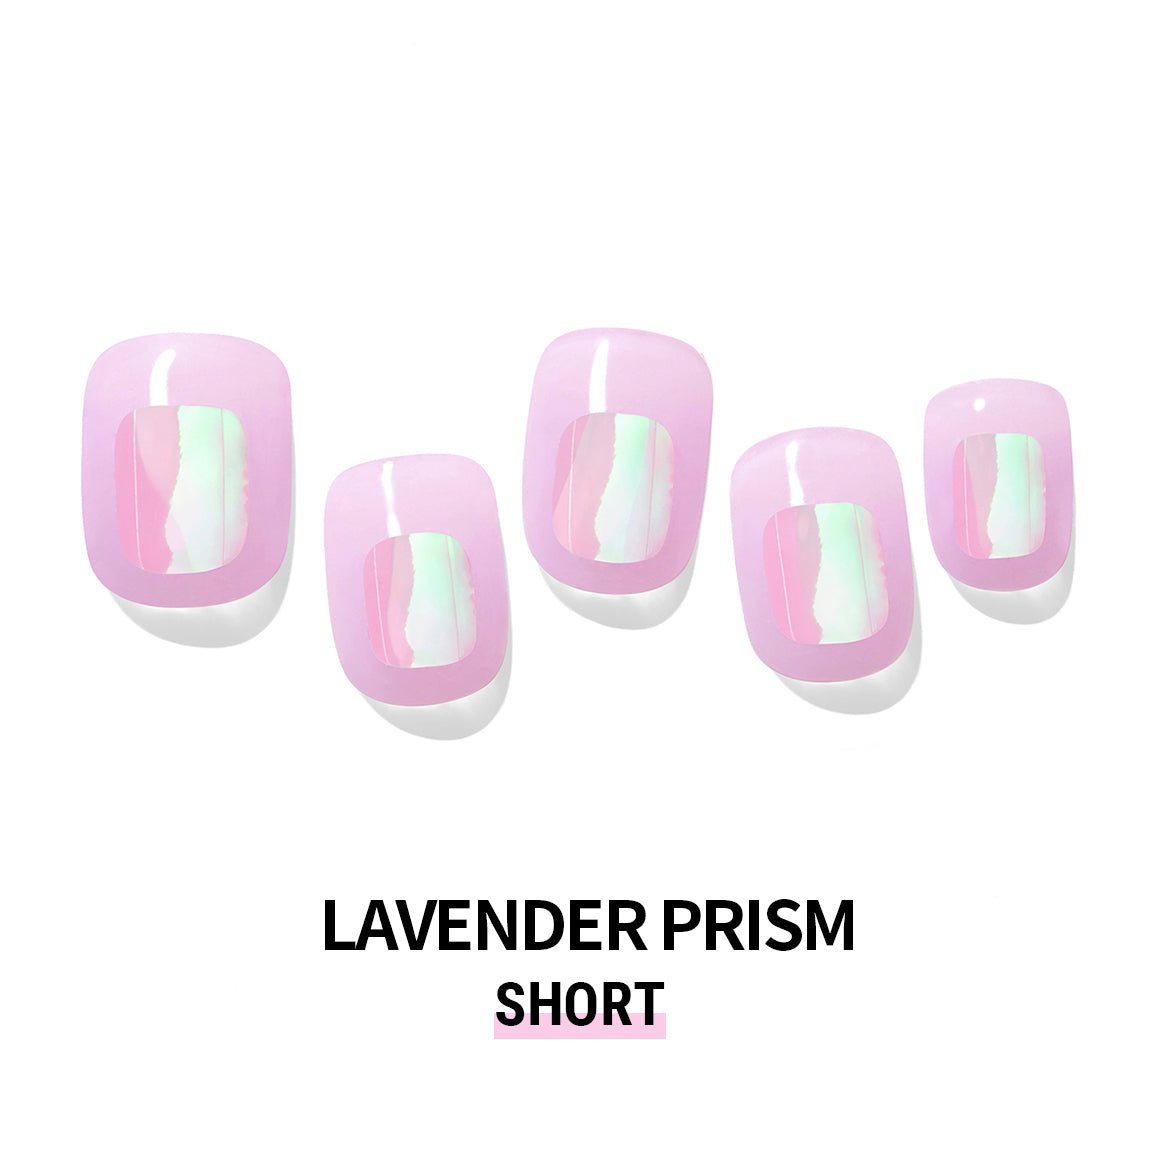 Lavender Prism (Short) - Glaze Art - Manicure - Dashing Diva Singapore